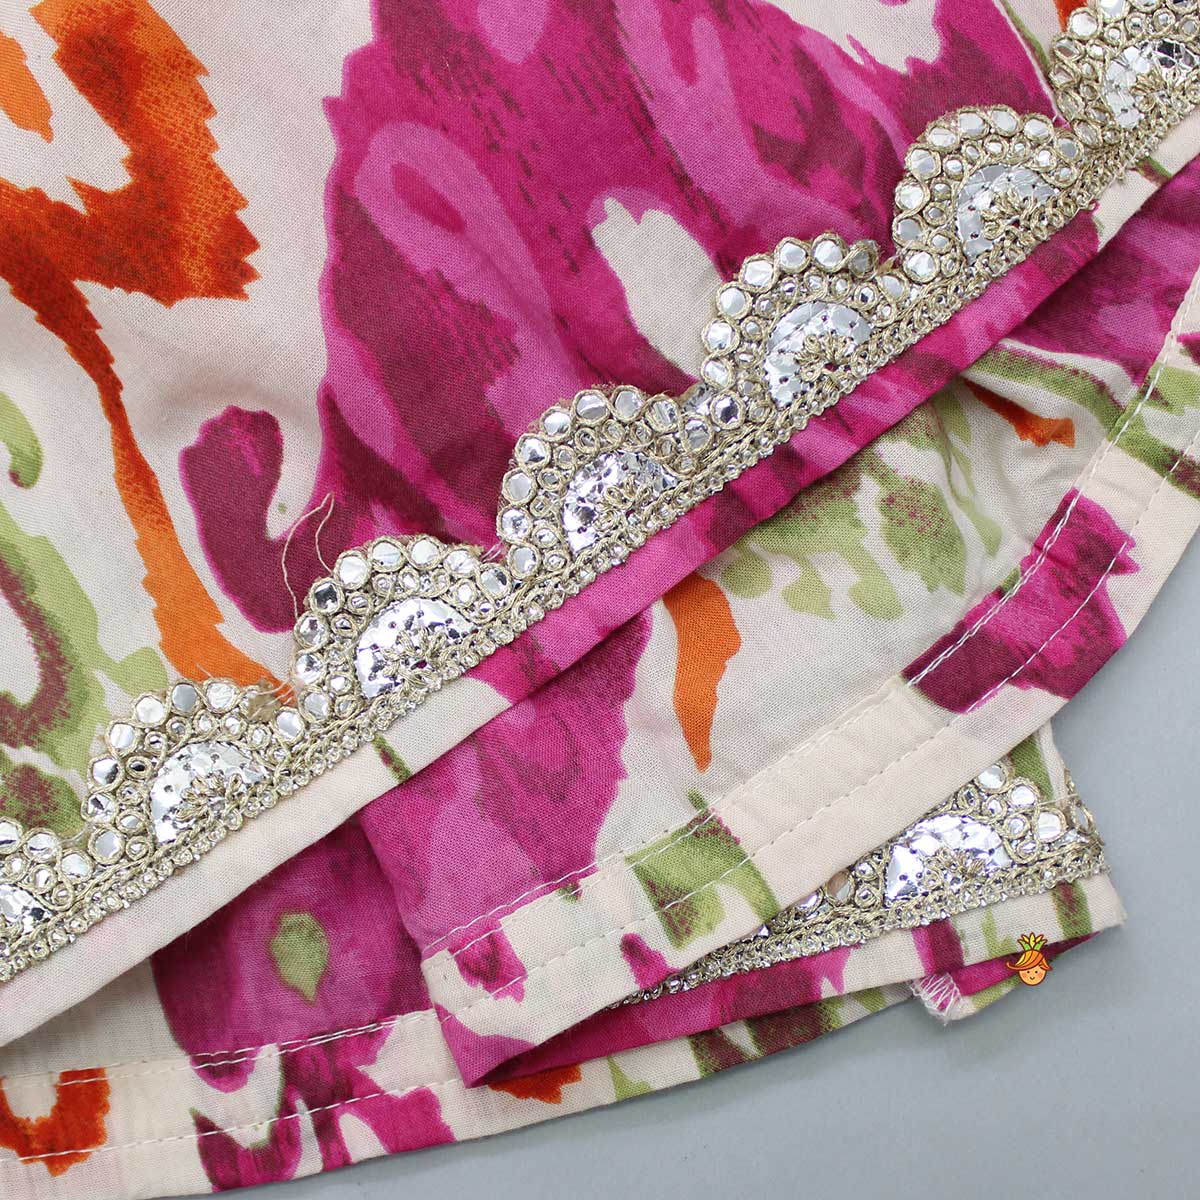 Tassels Enhanced Multicolour Printed Kurti And Sharara With Scalloped Lace Detail Pink Dupatta